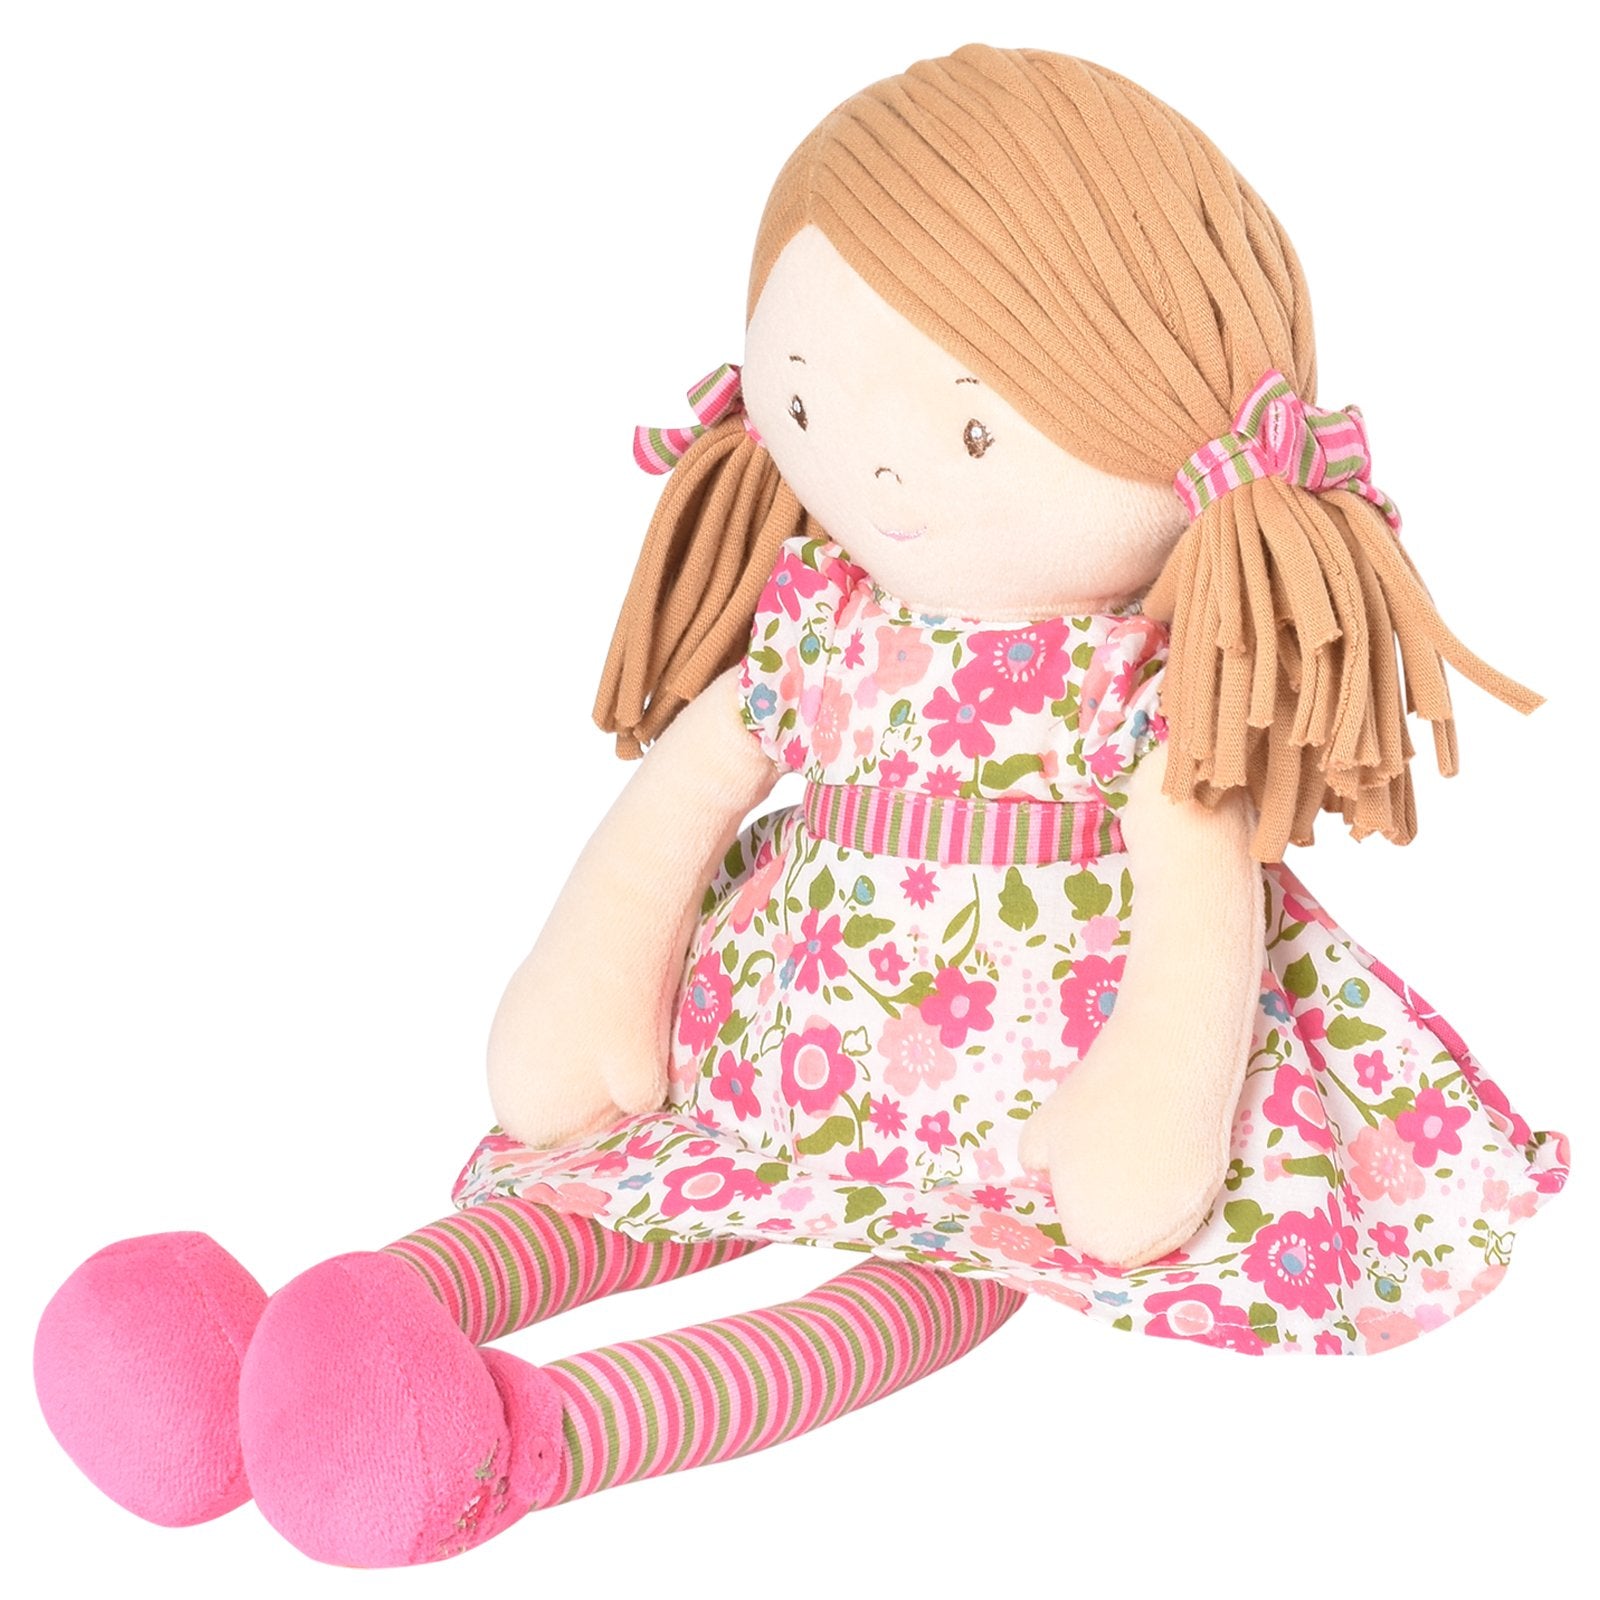 Fran Light Brown Hair with Dark Pink & Green Dress - Twinkle Twinkle Little One